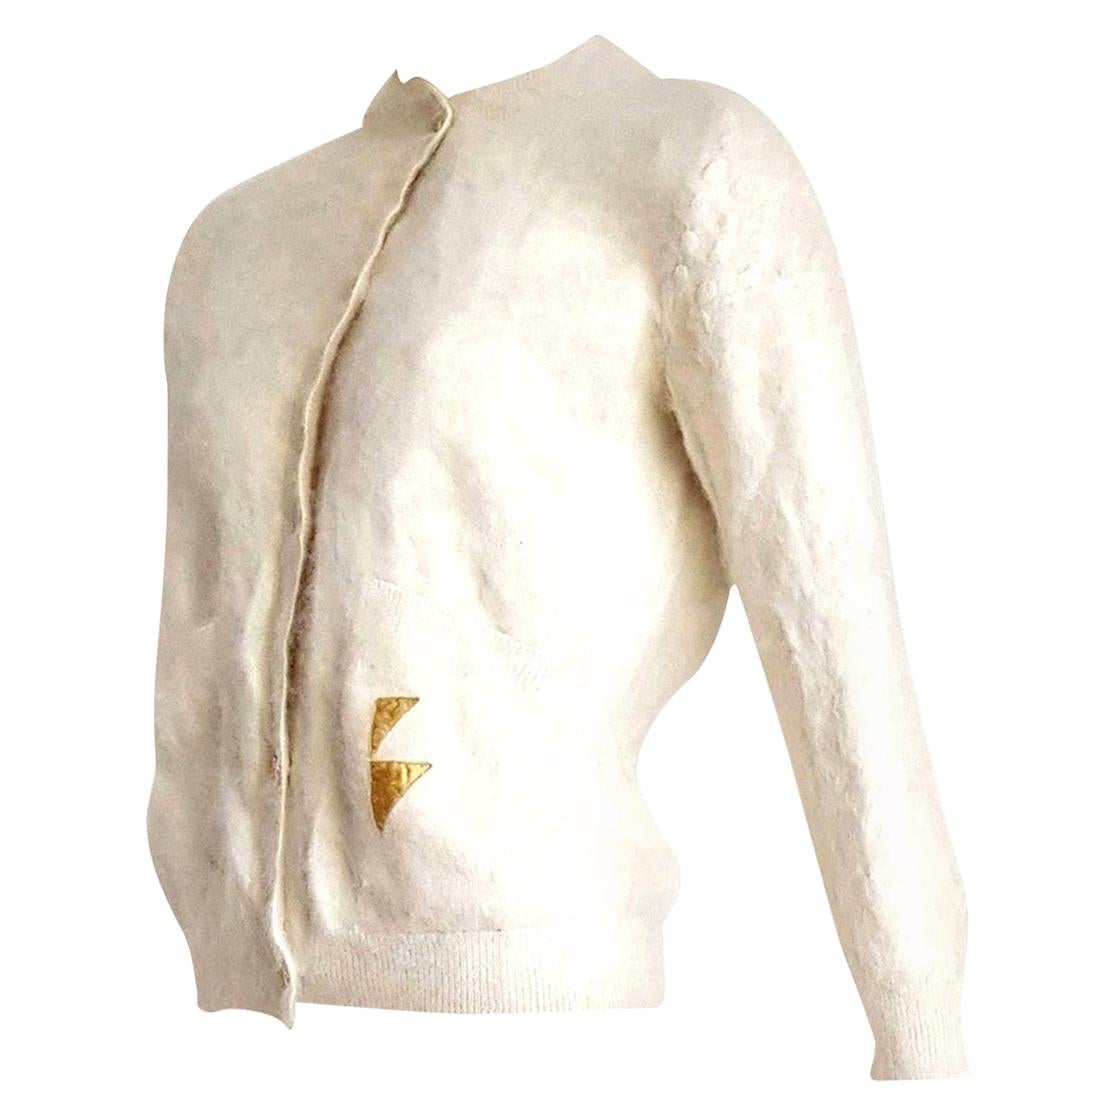 Thierry MUGLER "New" Angora Cream Golden Buttons Sweater - Unworn For Sale